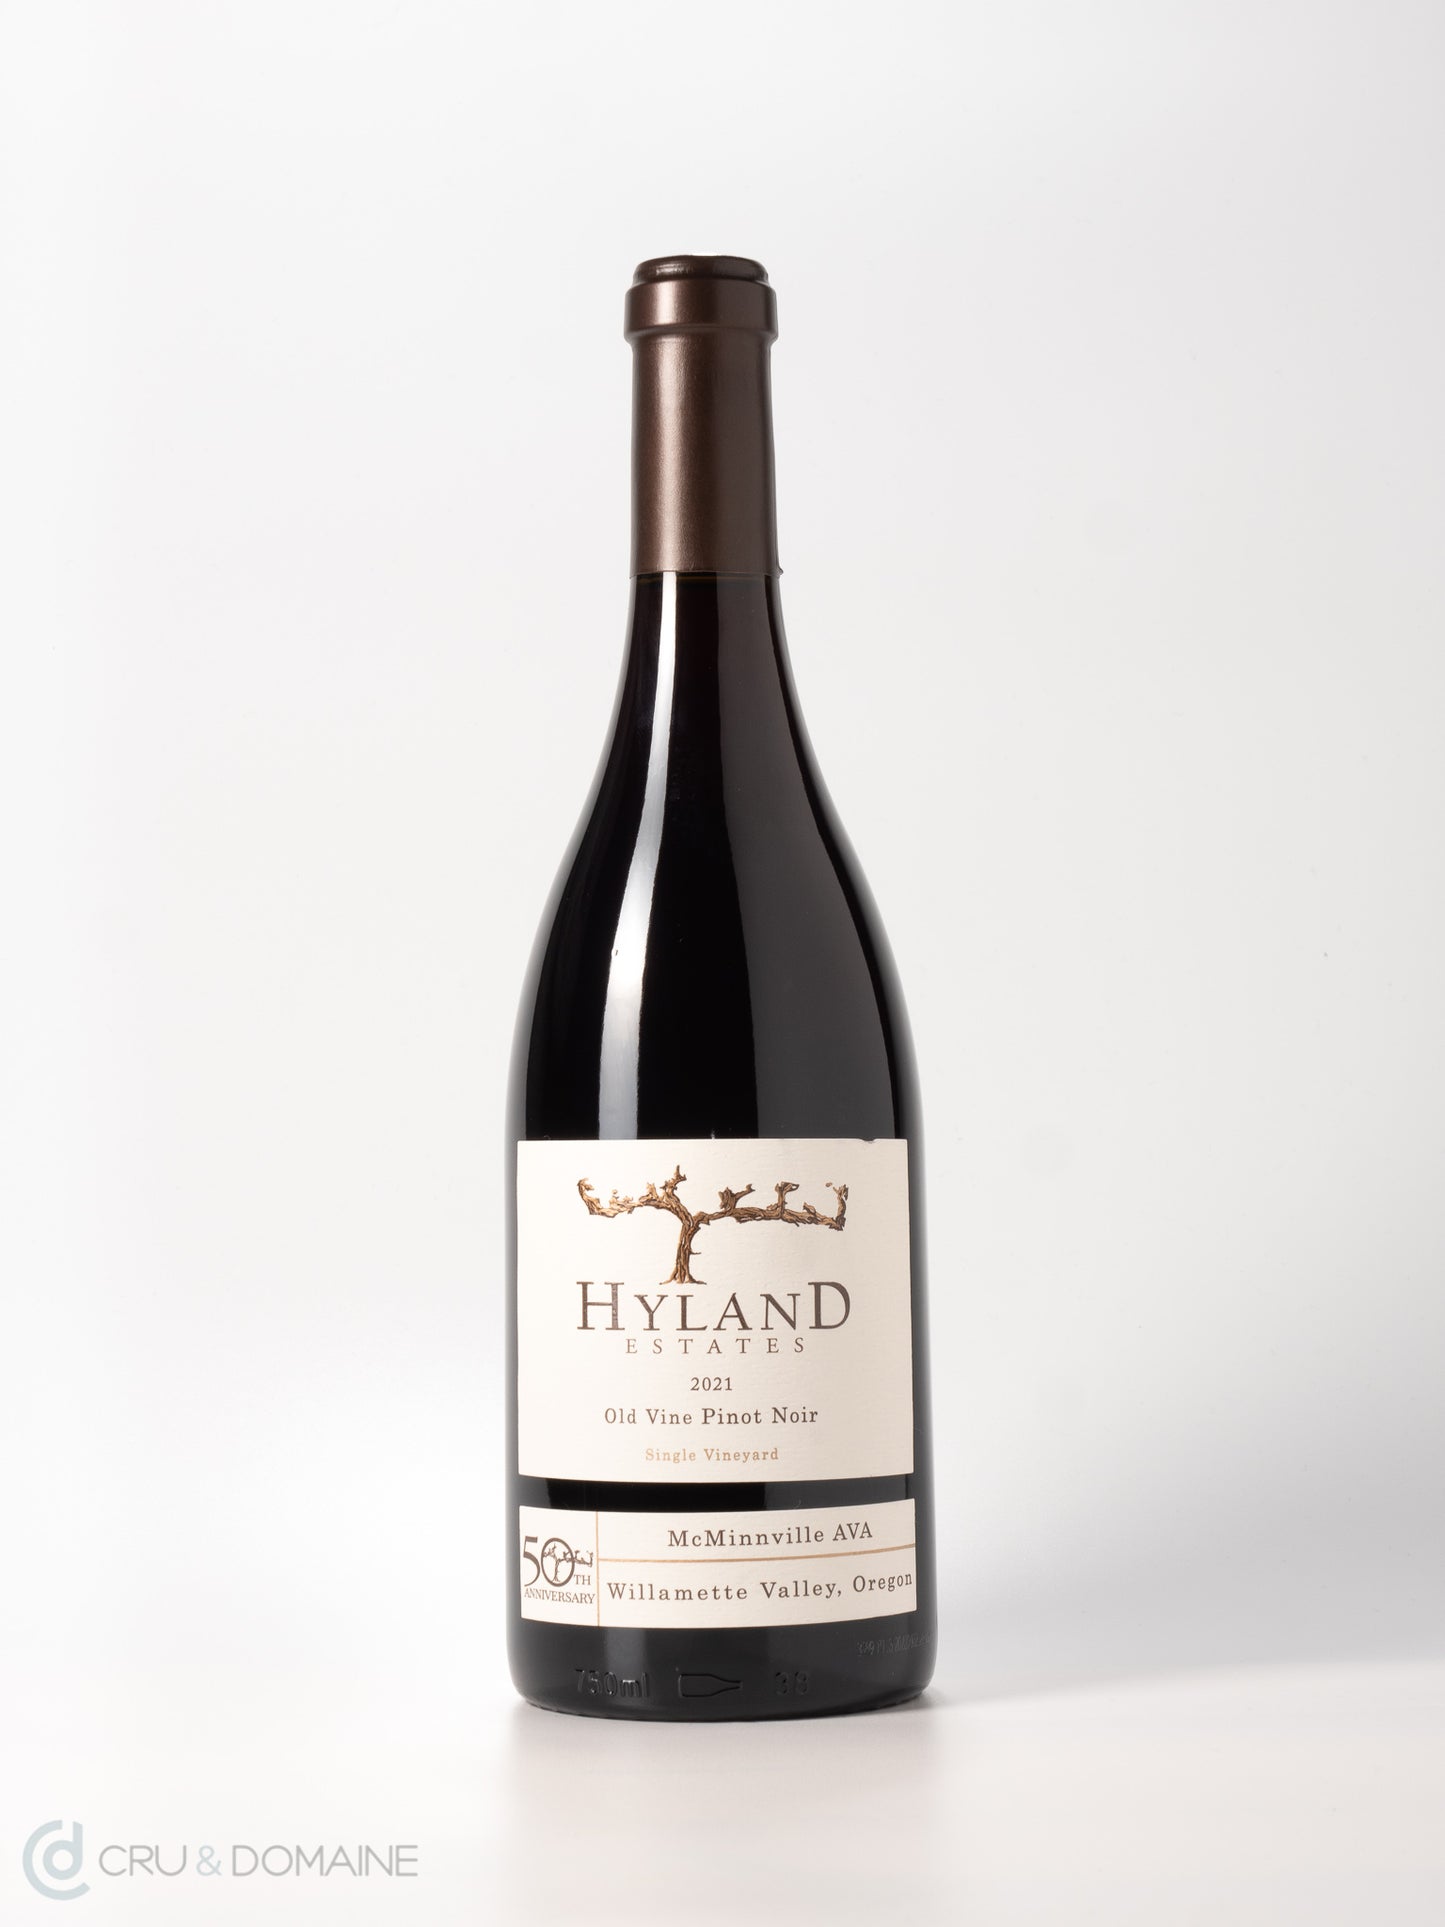 2021 Hyland Estates, Old Vine Pinot Noir, McMinnville, Williamette Valley, Oregon